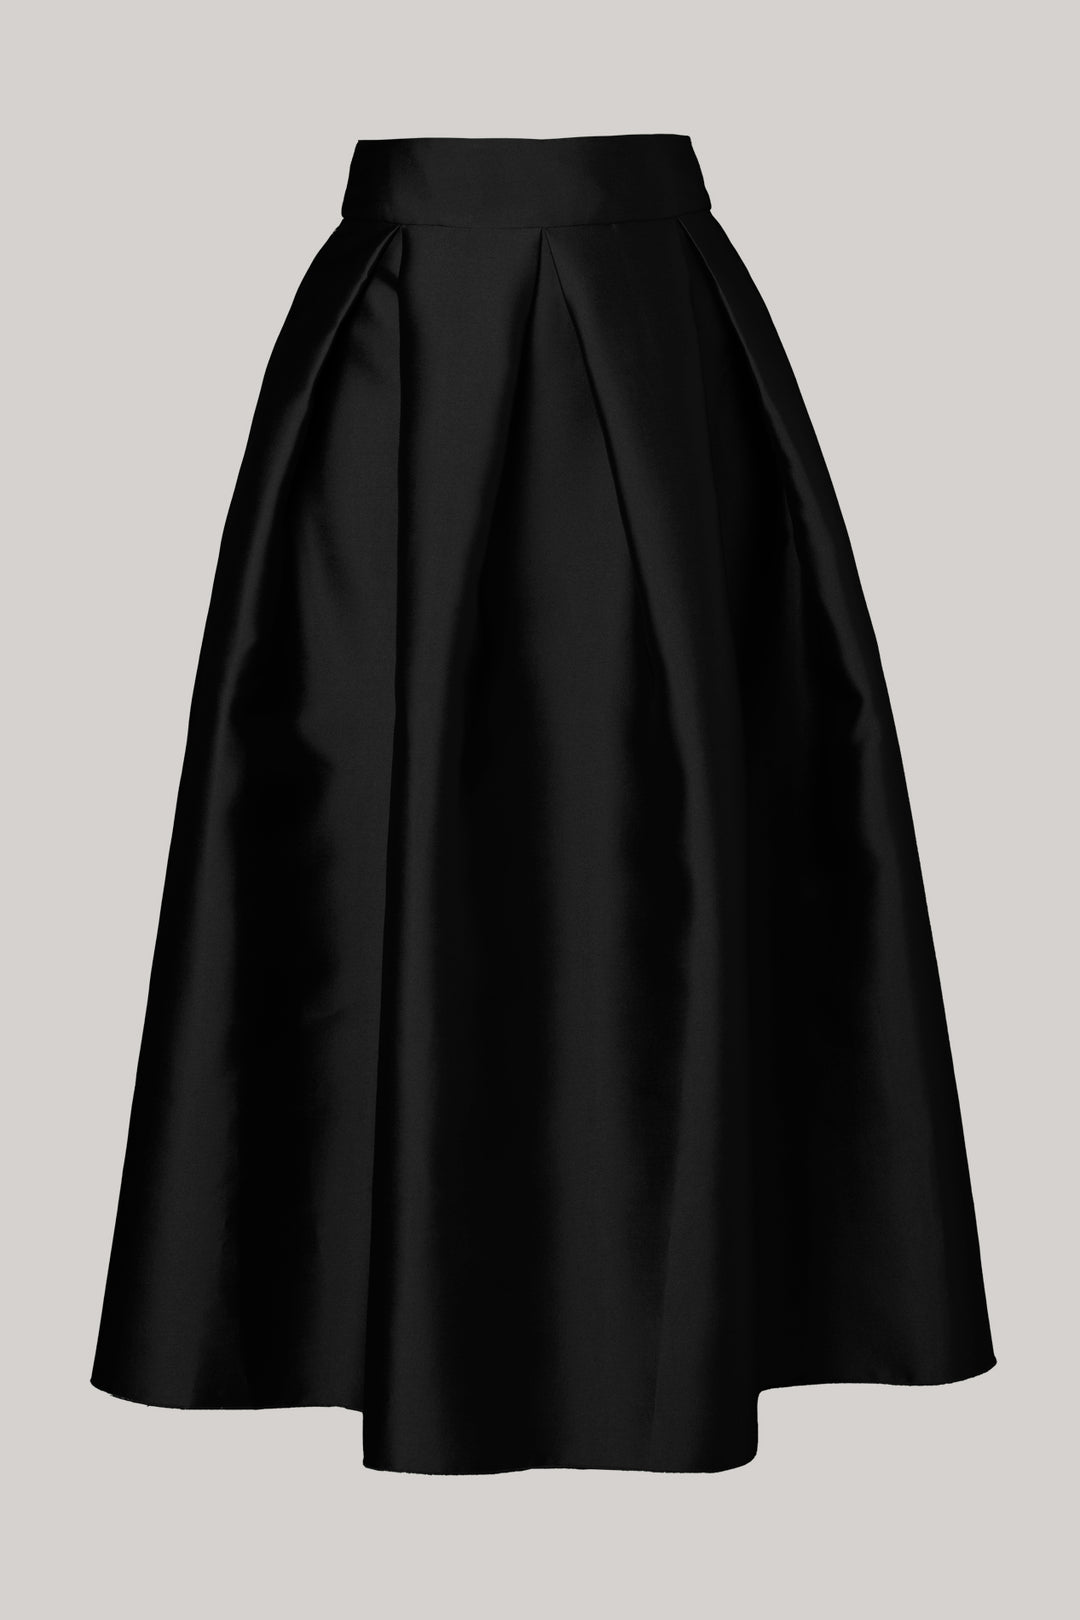 Jasmine Structured Black Mikado Skirt